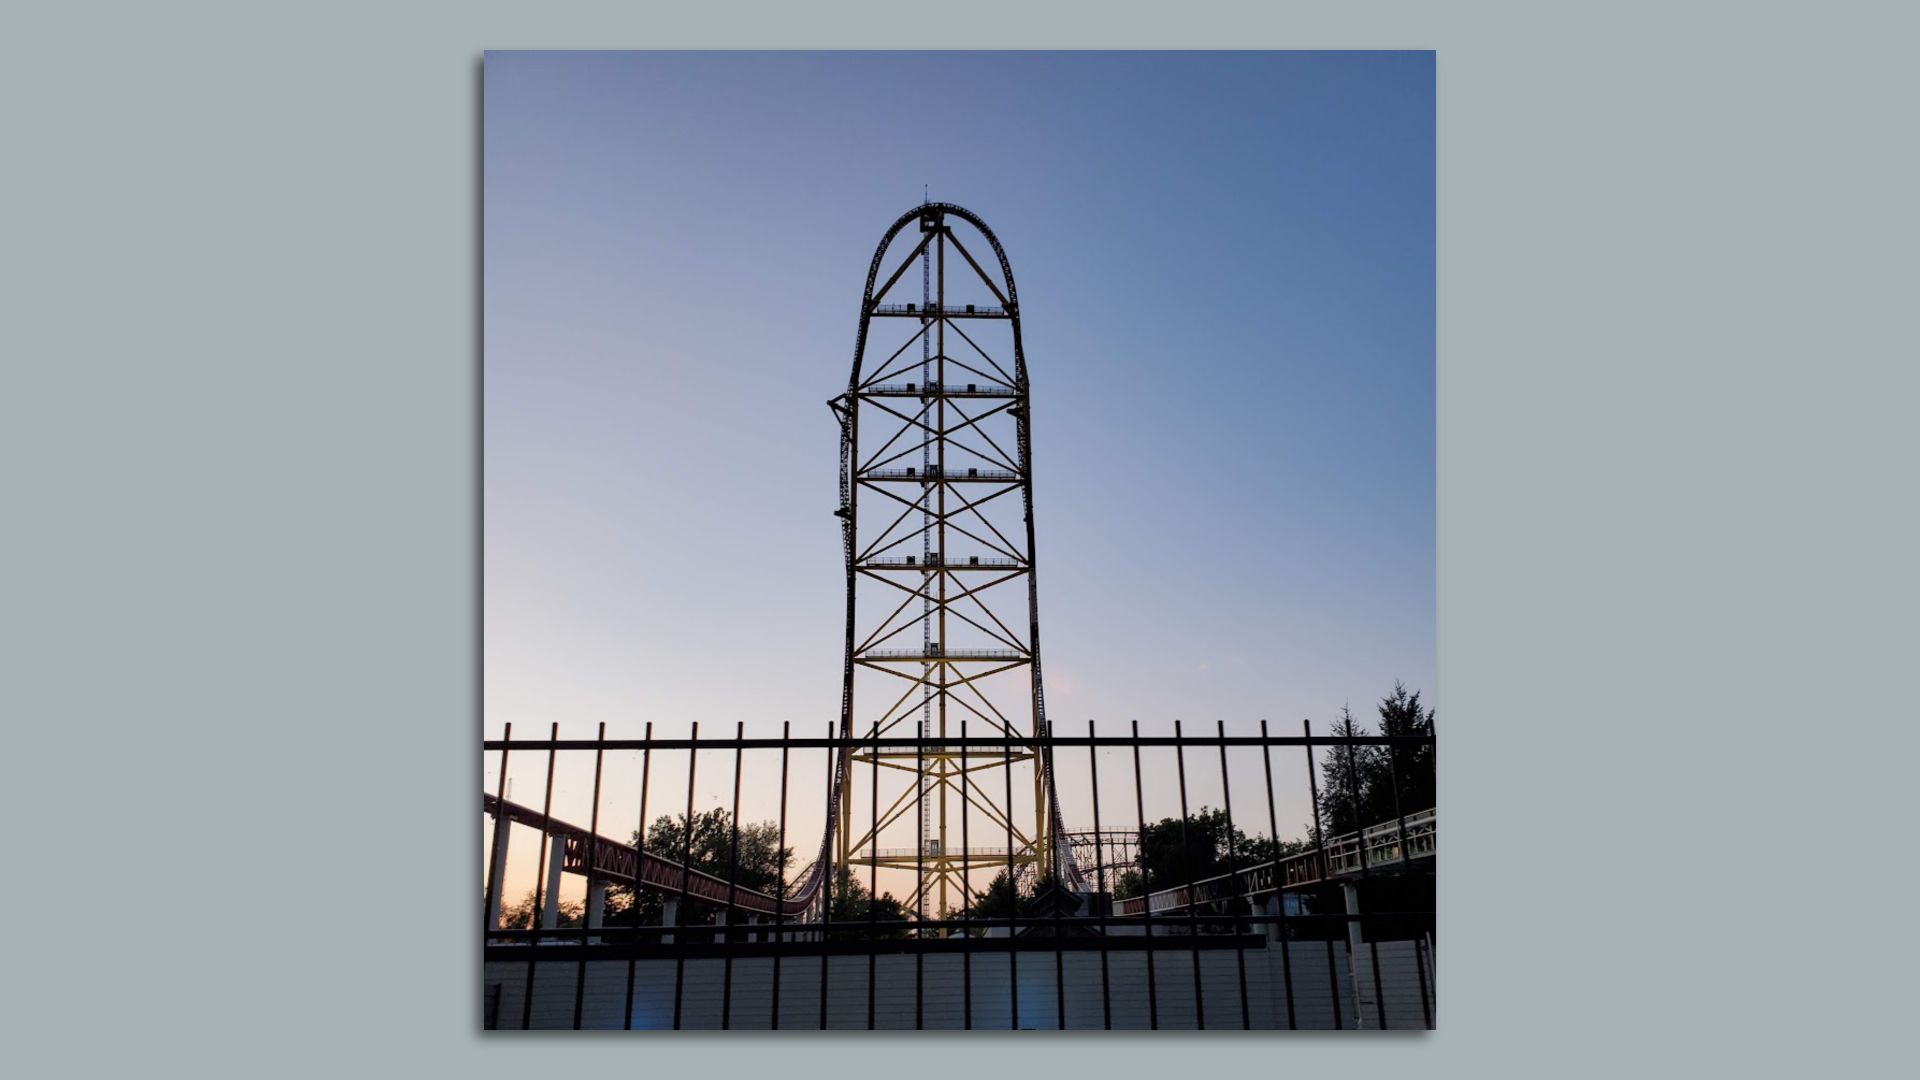 Top Thrill Dragster roller coaster at Cedar Point.